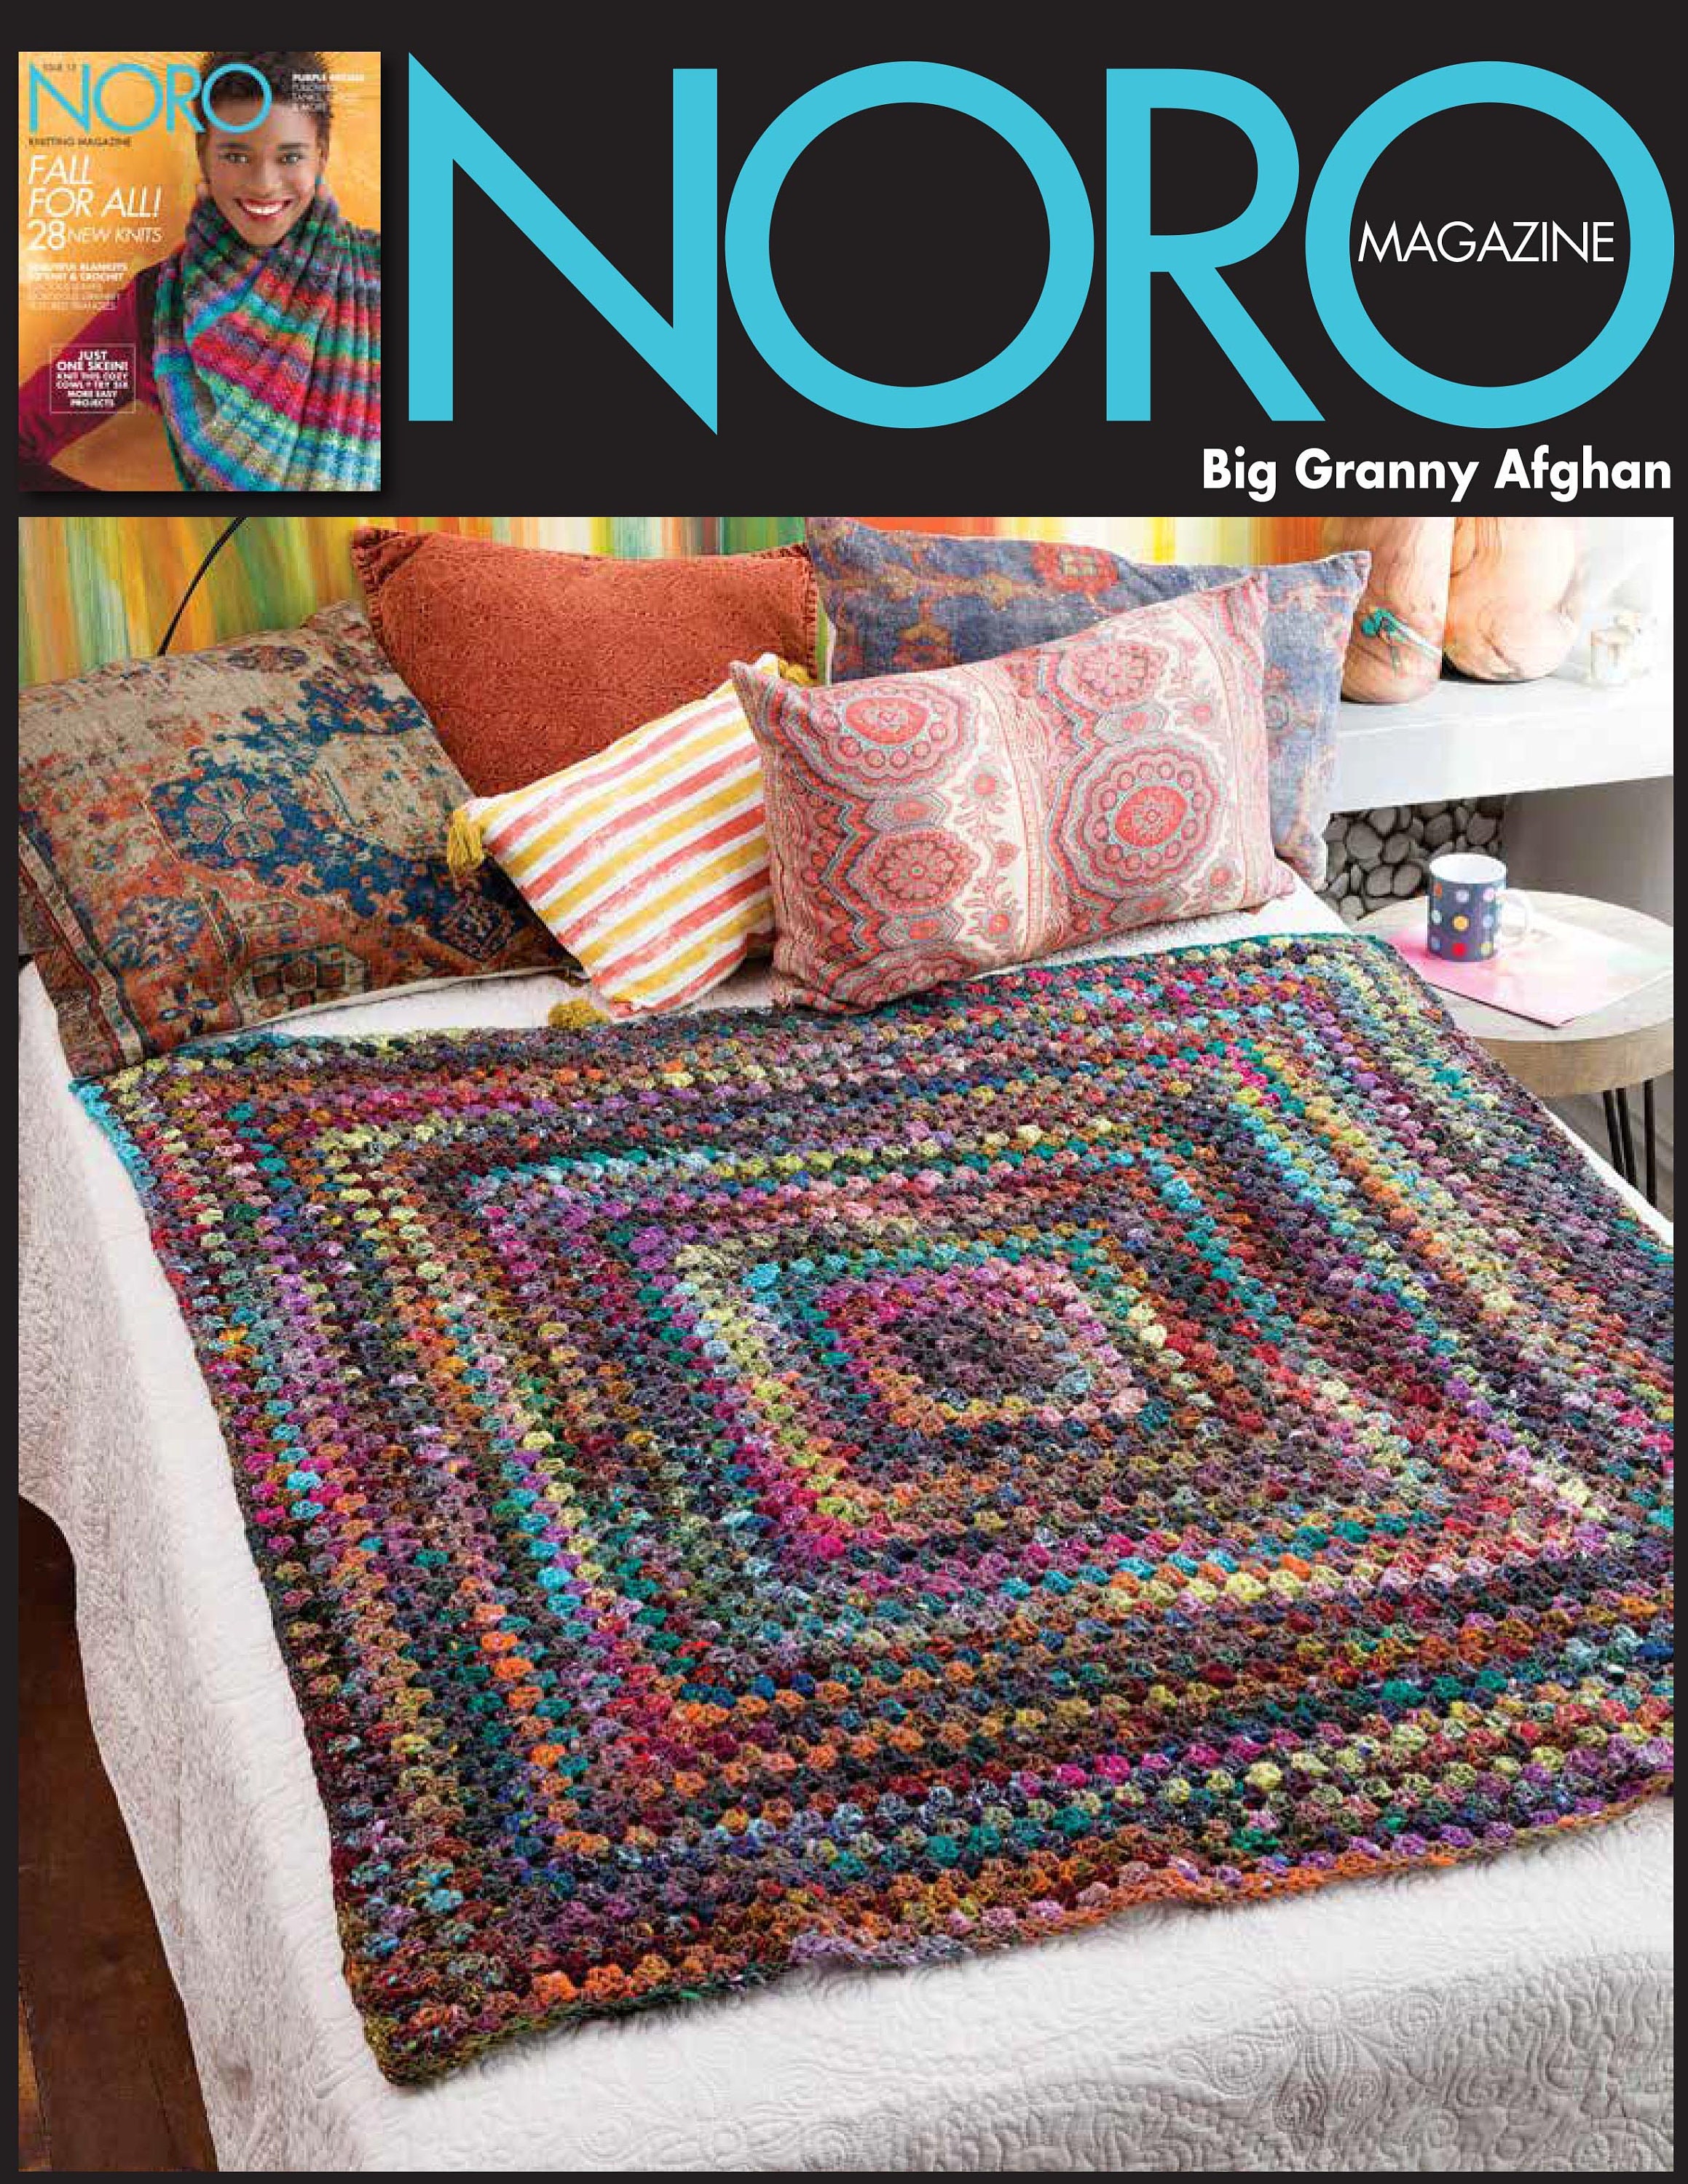 NORO Ito Big Granny Afghan Crochet Kit Includes 5 X 200g Noro